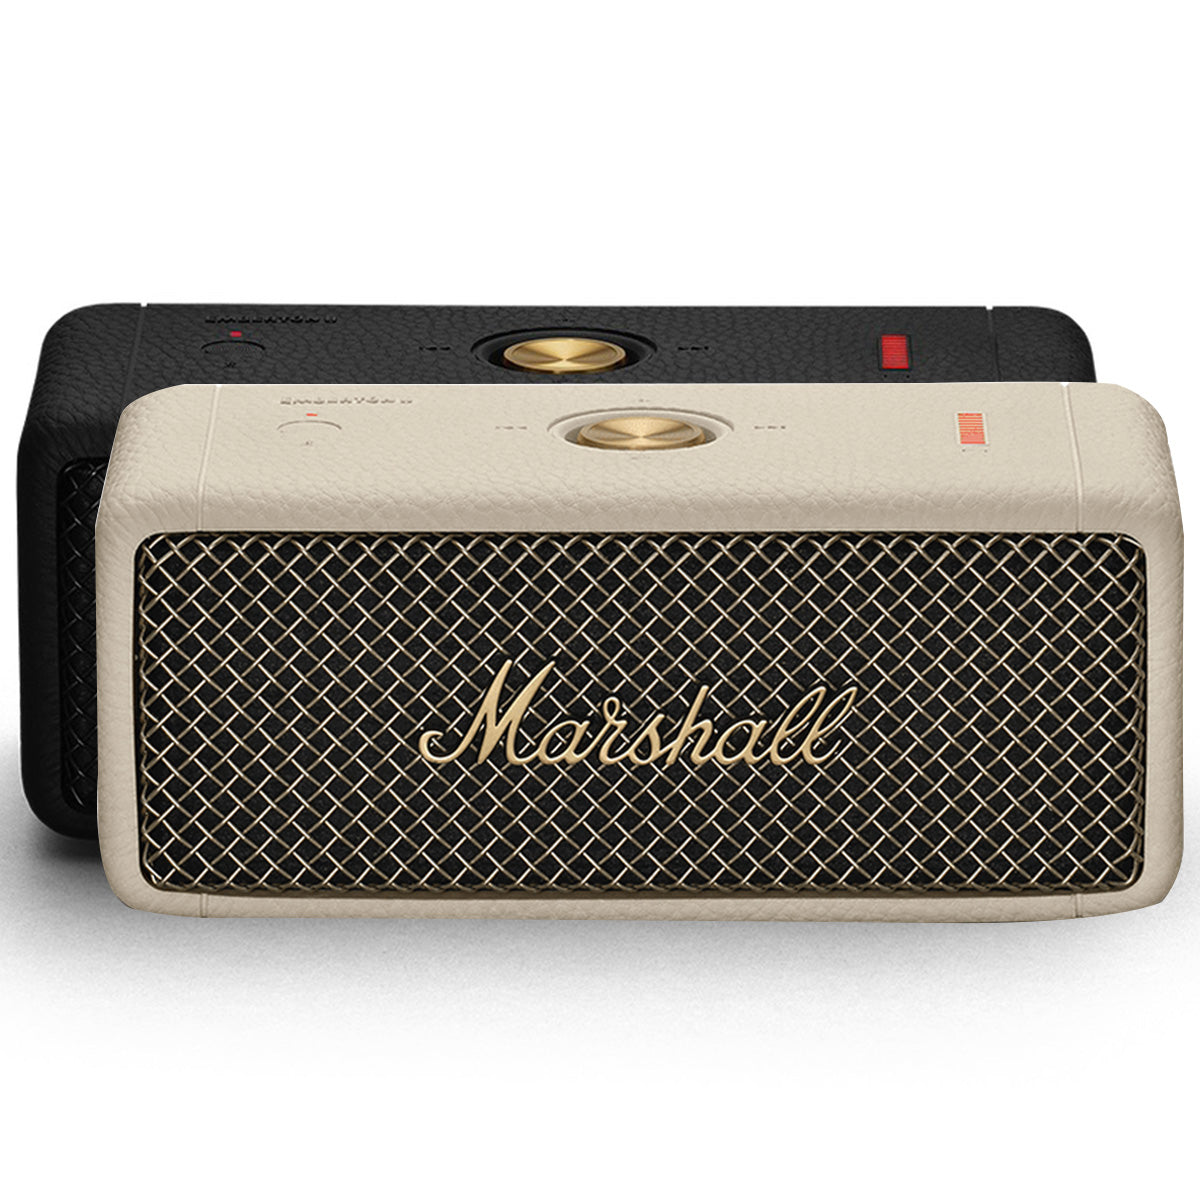 Marshall Emberton ll Wireless Speaker